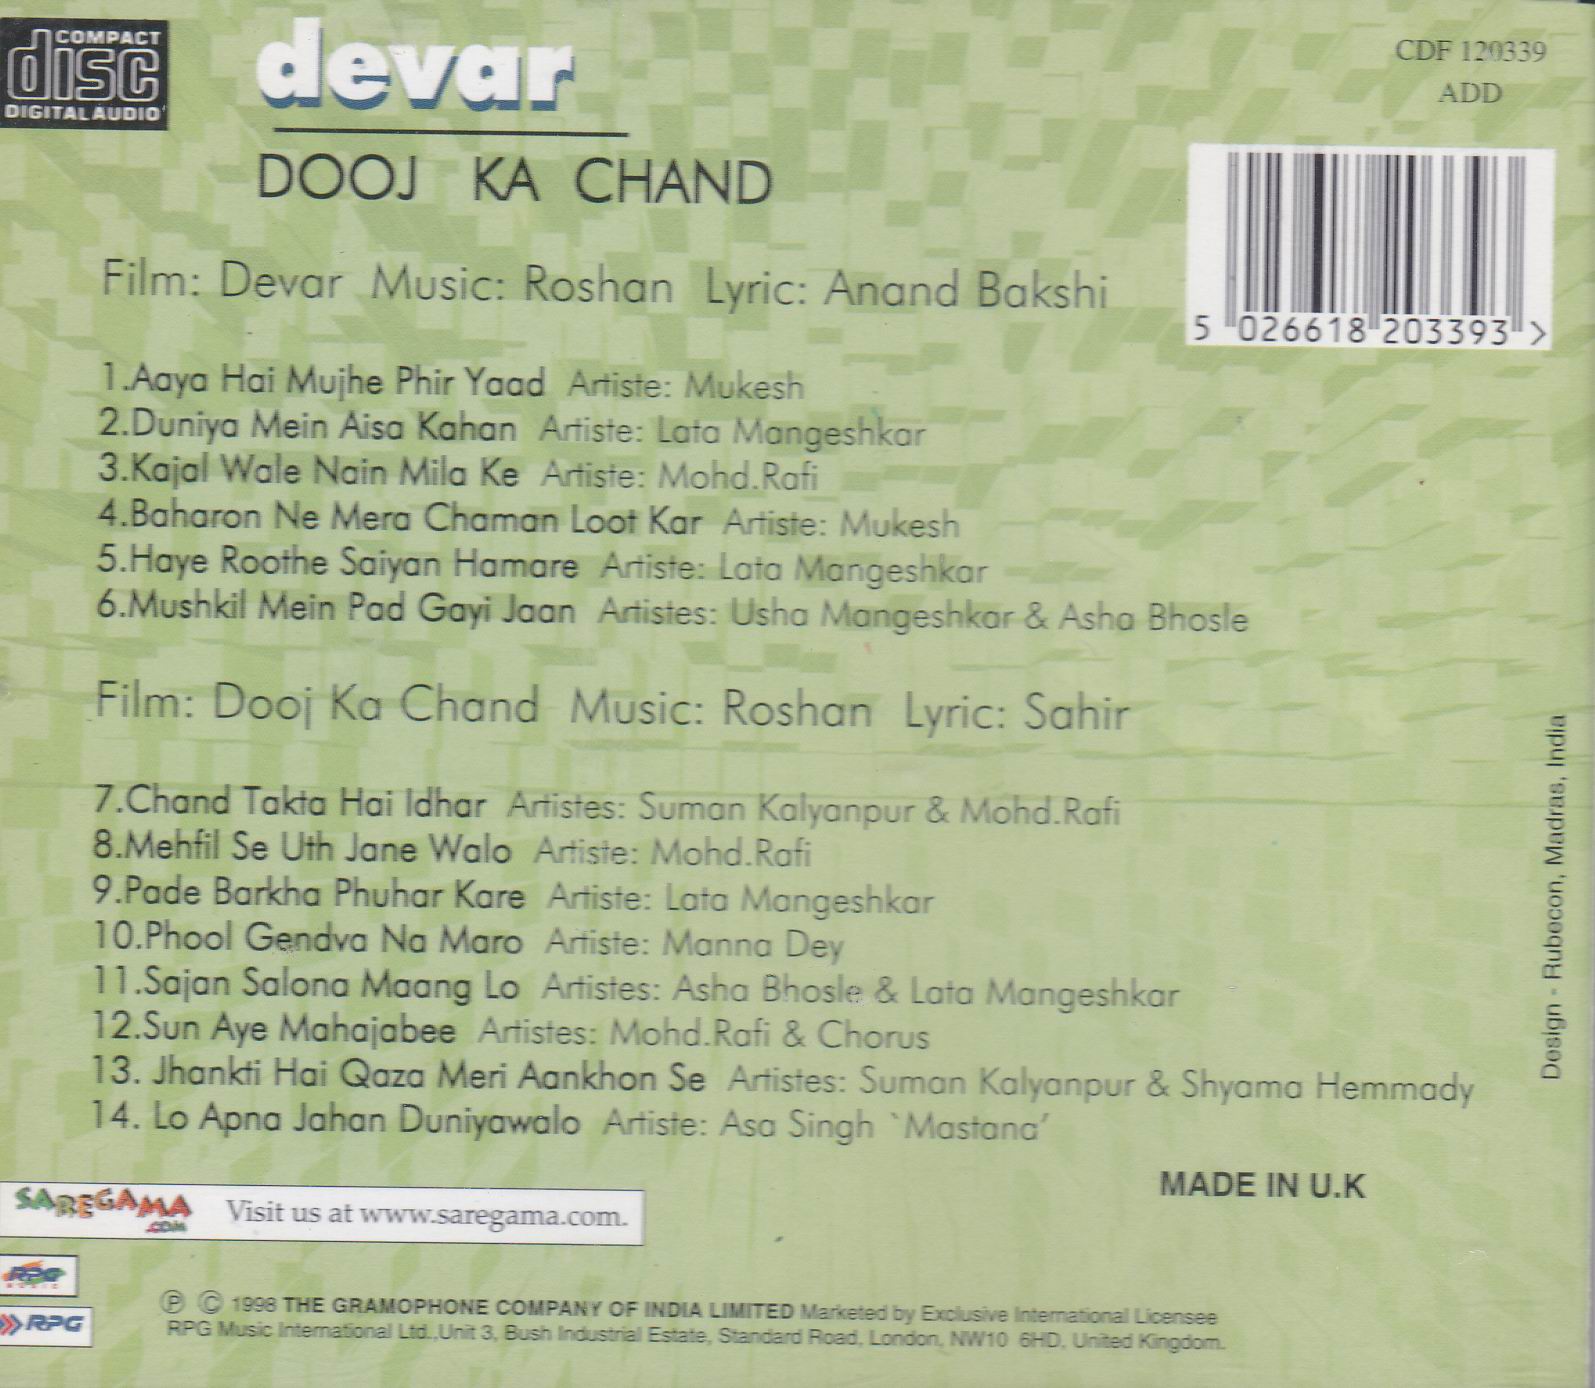 Indian Cd Devar Dooj Ka Chand EMI CD - Click Image to Close